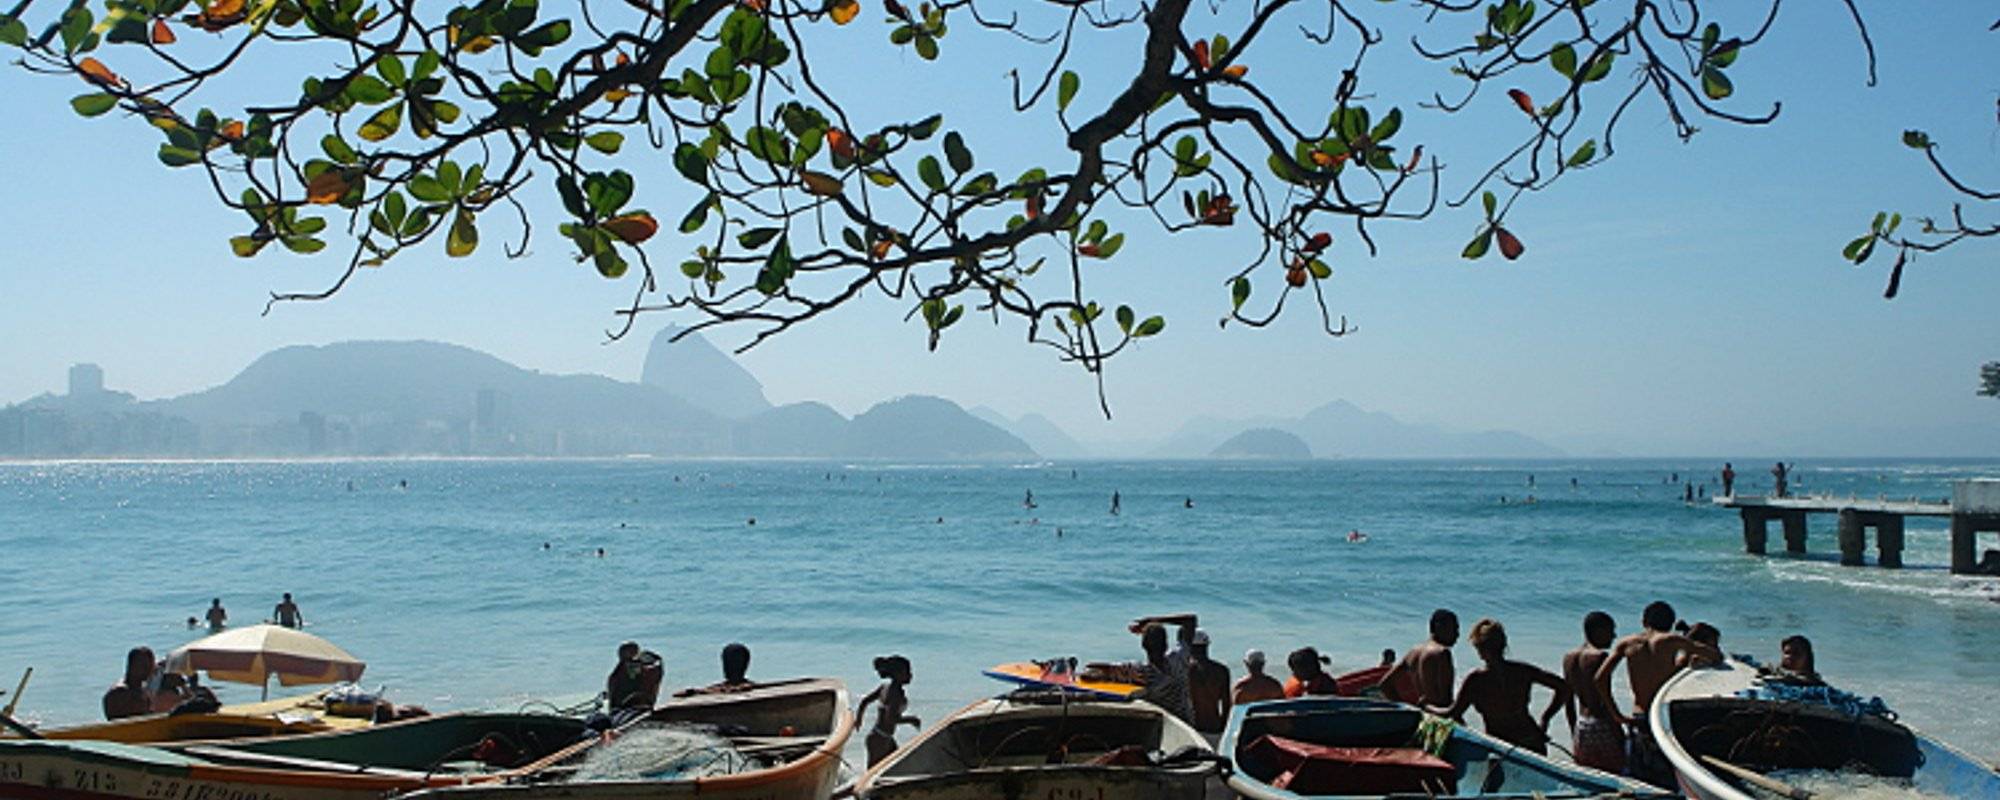 Beaches of Rio de Janeiro: Copacabana and Ipanema